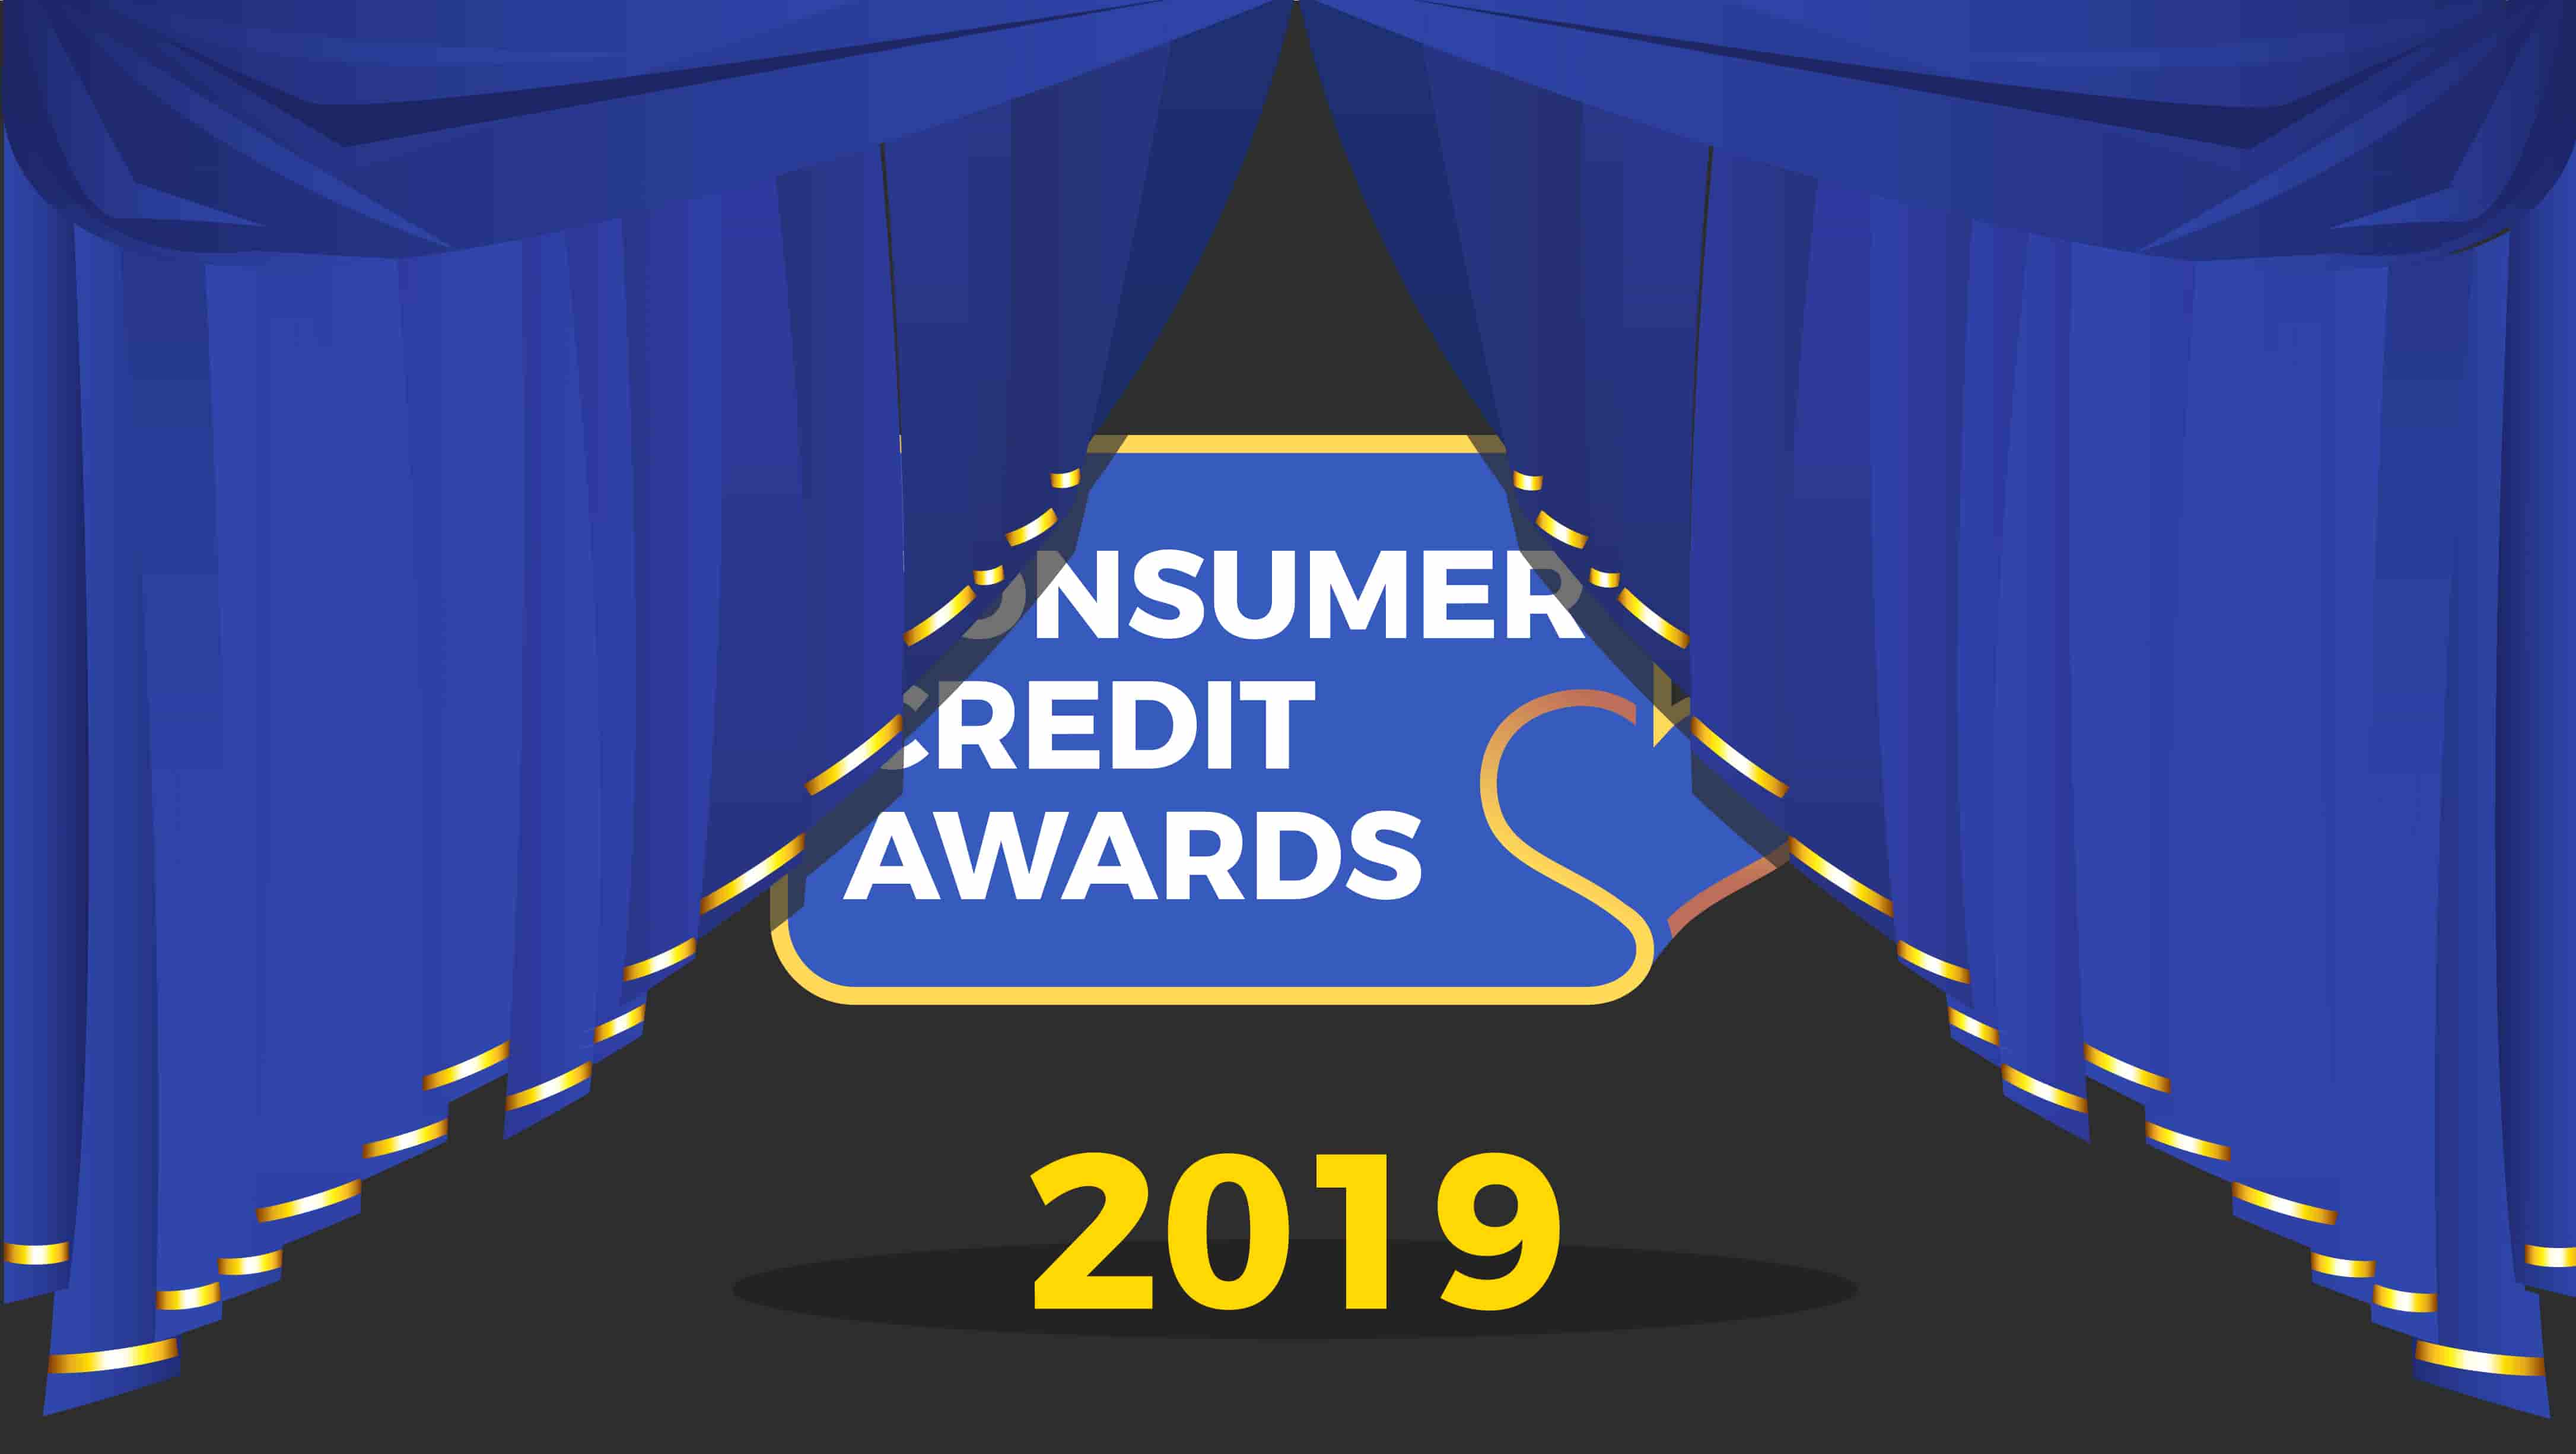 Consumer Credit Awards 2019: Winners